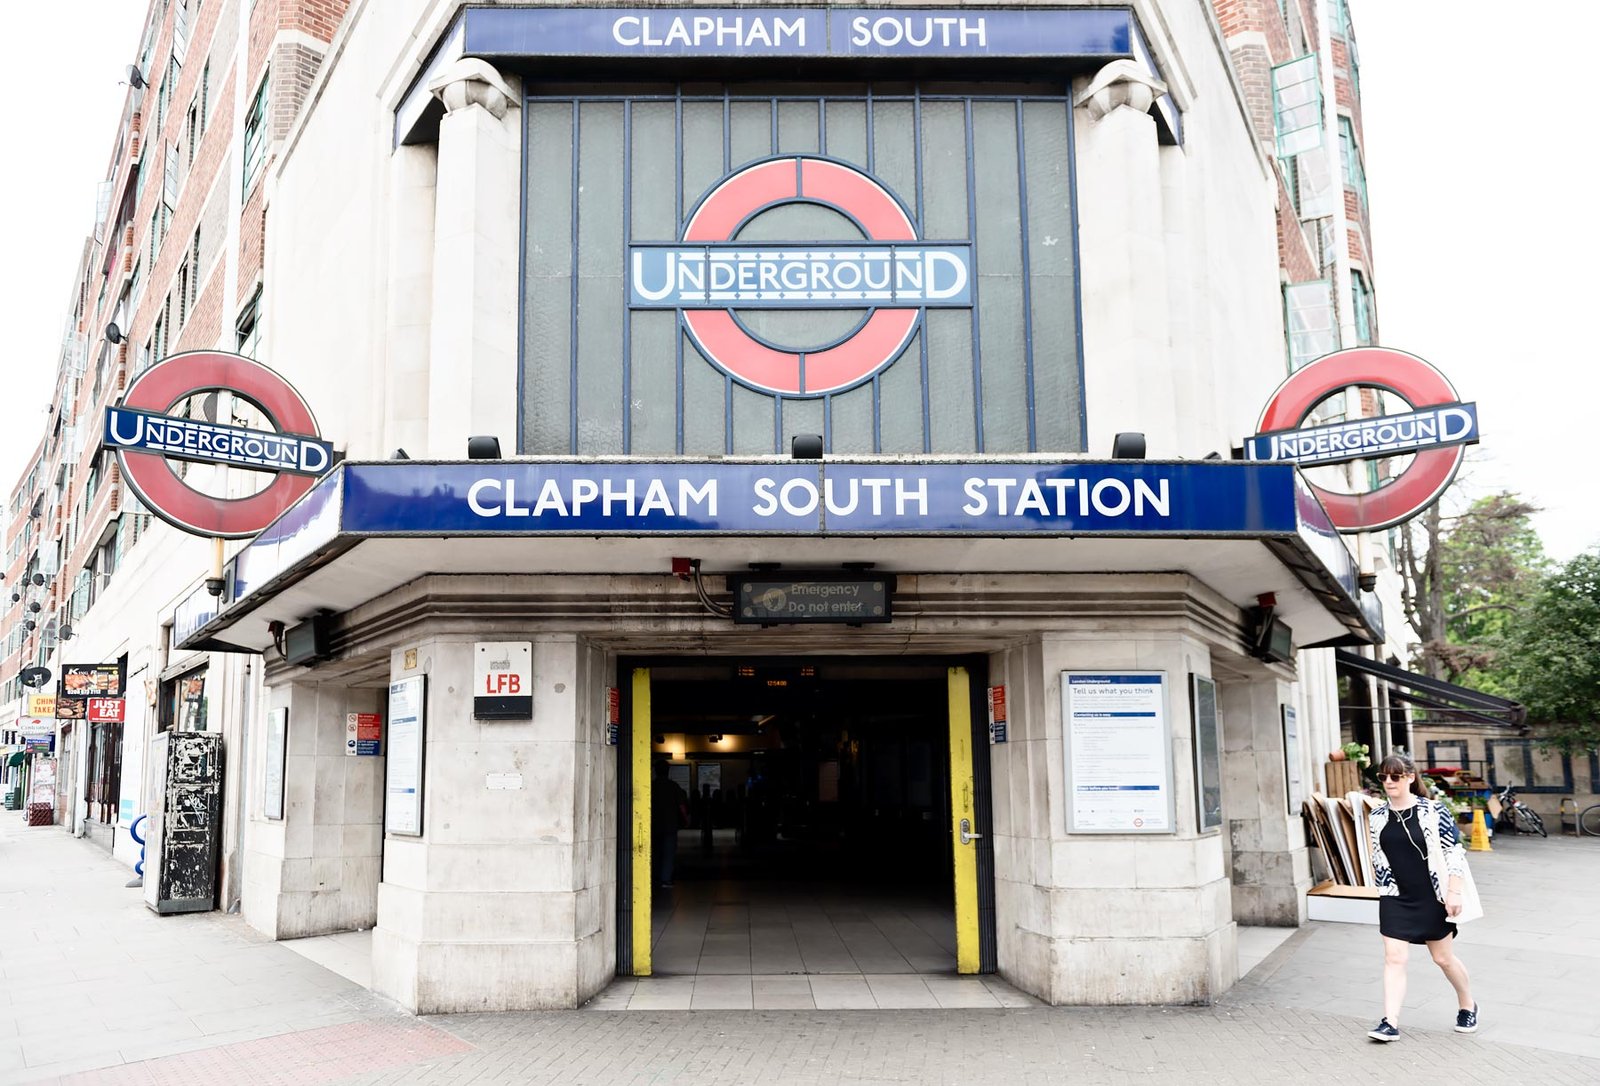 Inside London's Hidden Sights: Clapham South deep-level shelter. A secret London tour with Hidden London underneath Clapham South Station.